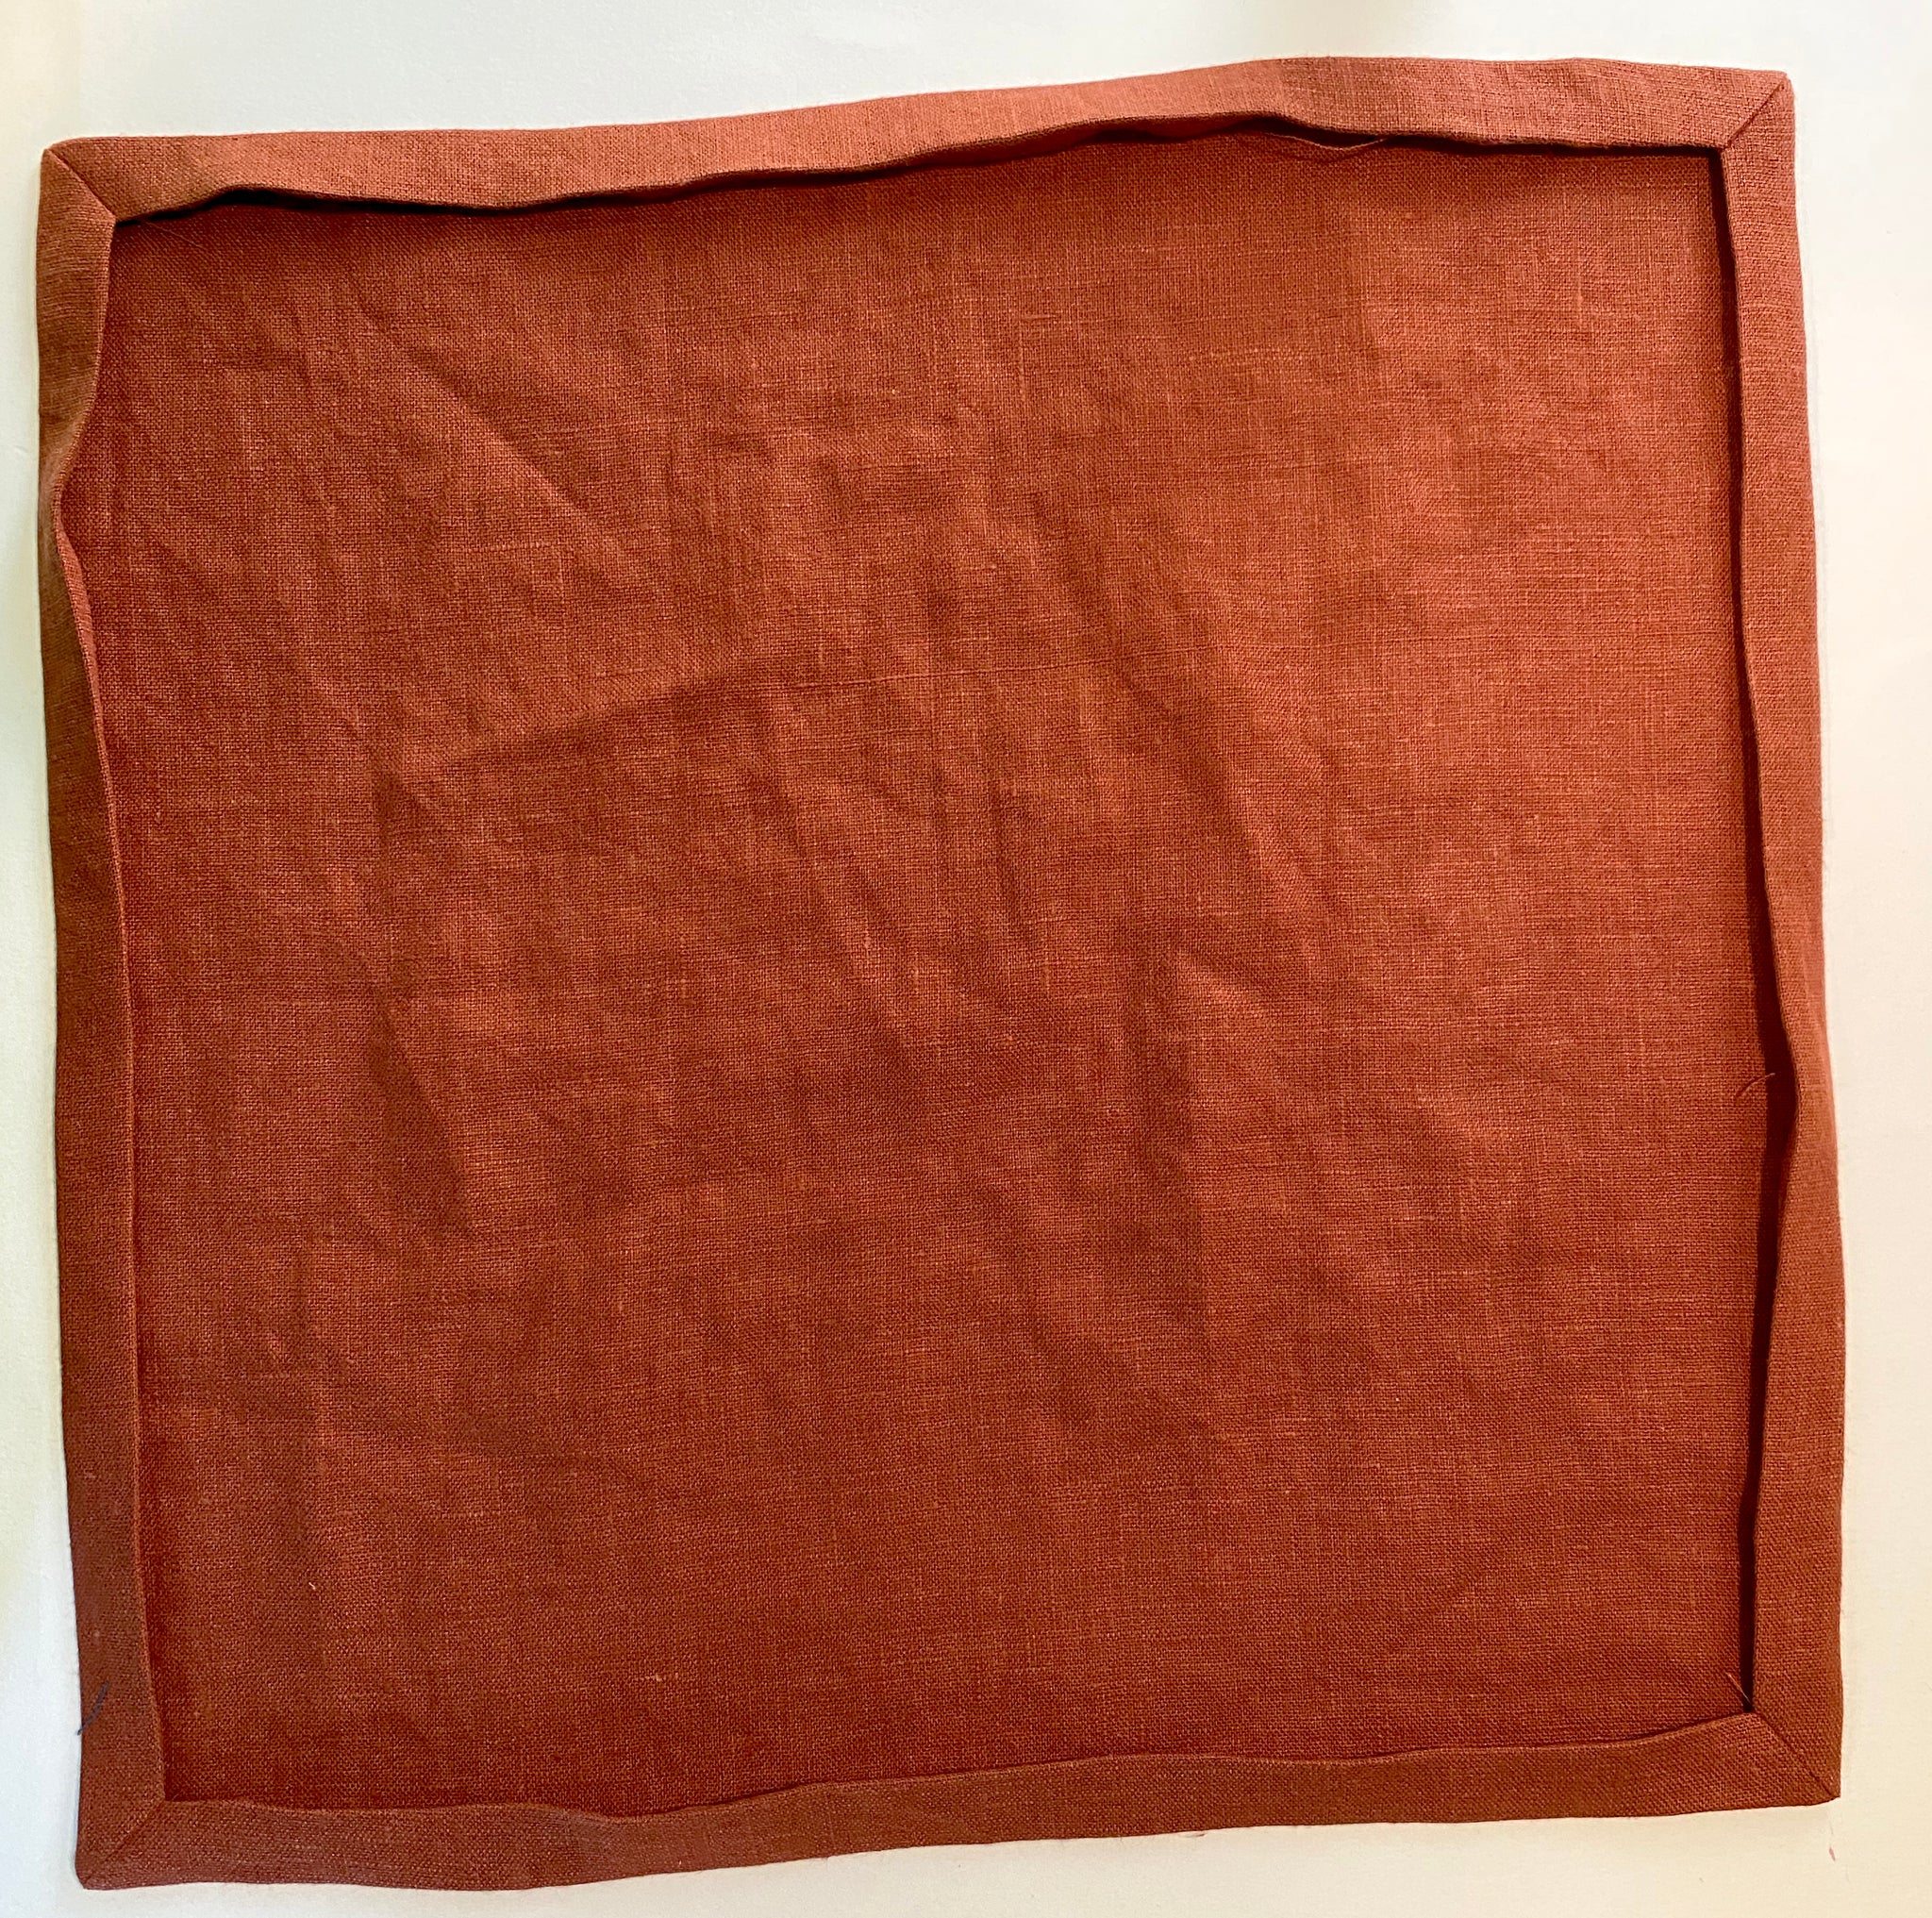 How To Make Mitre-Edged Linen Napkins ⋆ Design Mom